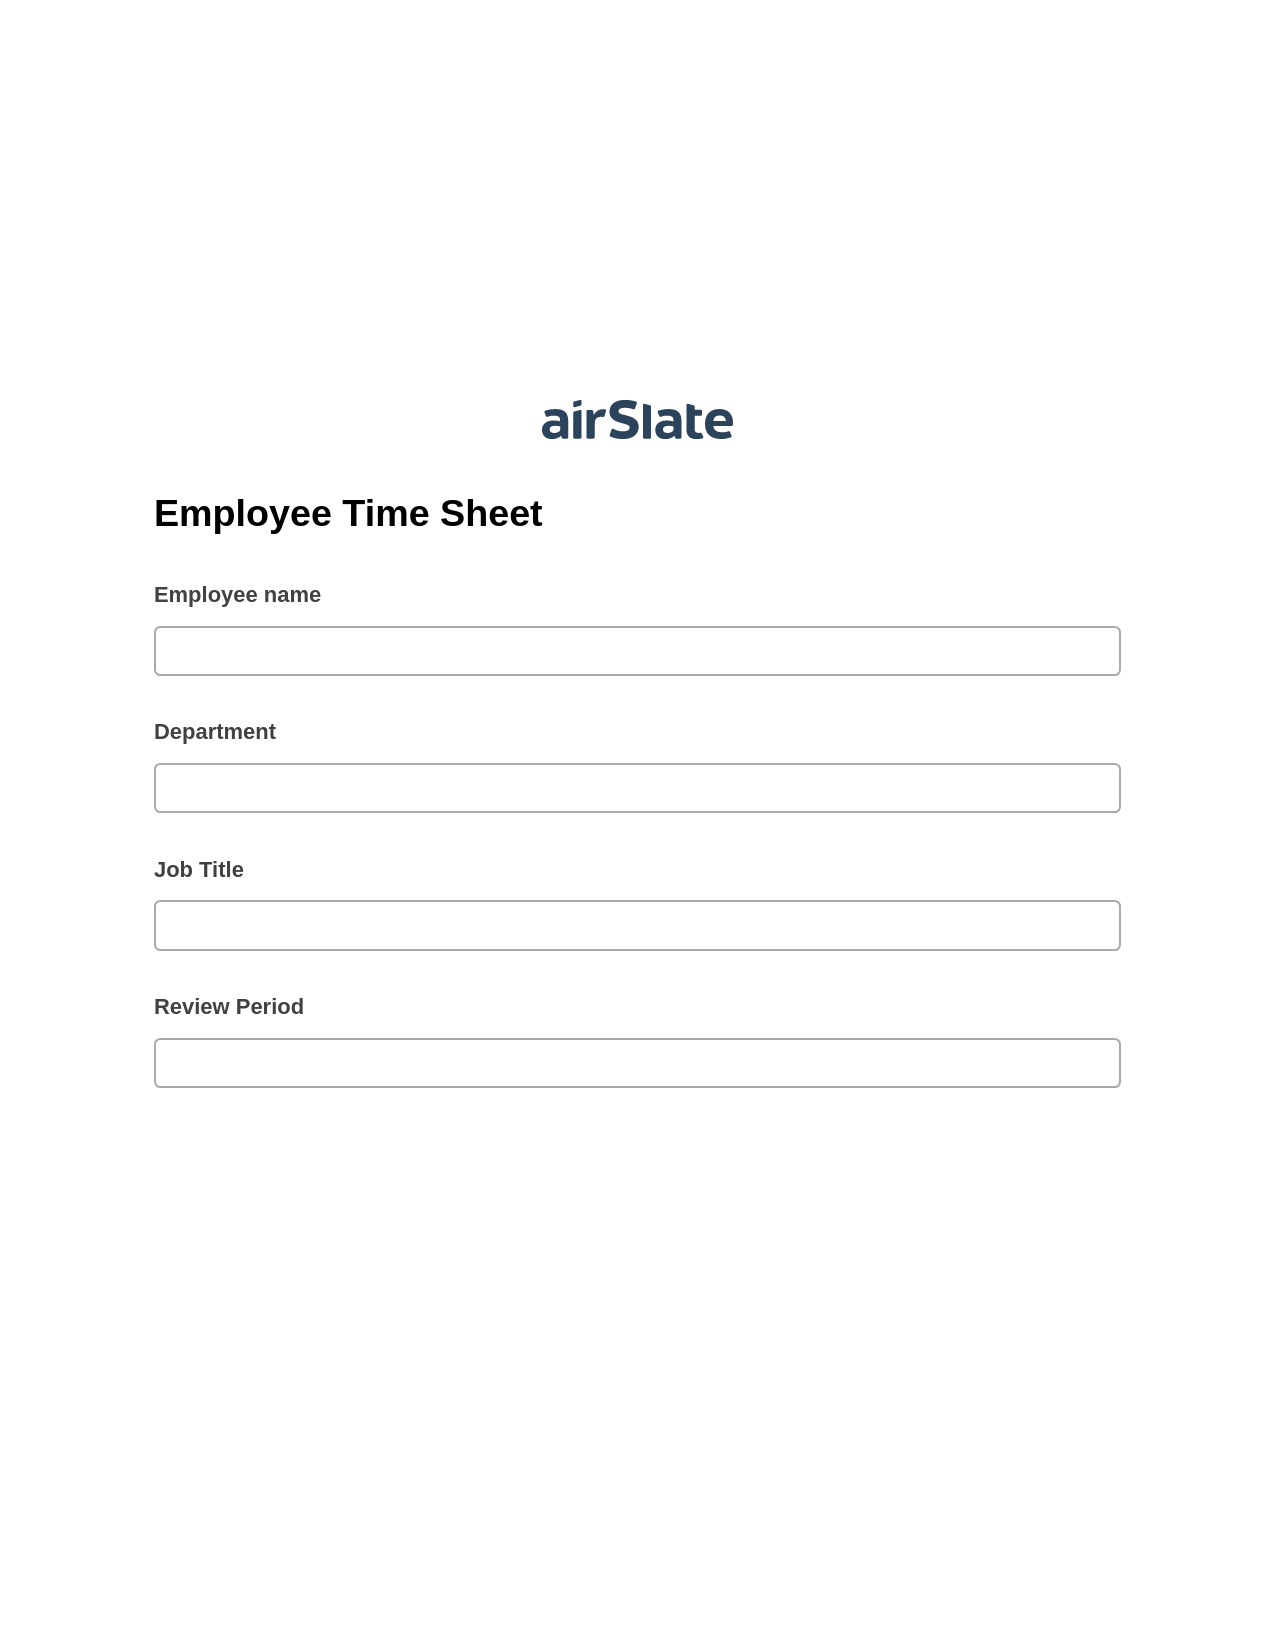 Multirole Employee Time Sheet Pre-fill from another Slate Bot, Slack Notification Bot, Slack Notification Postfinish Bot